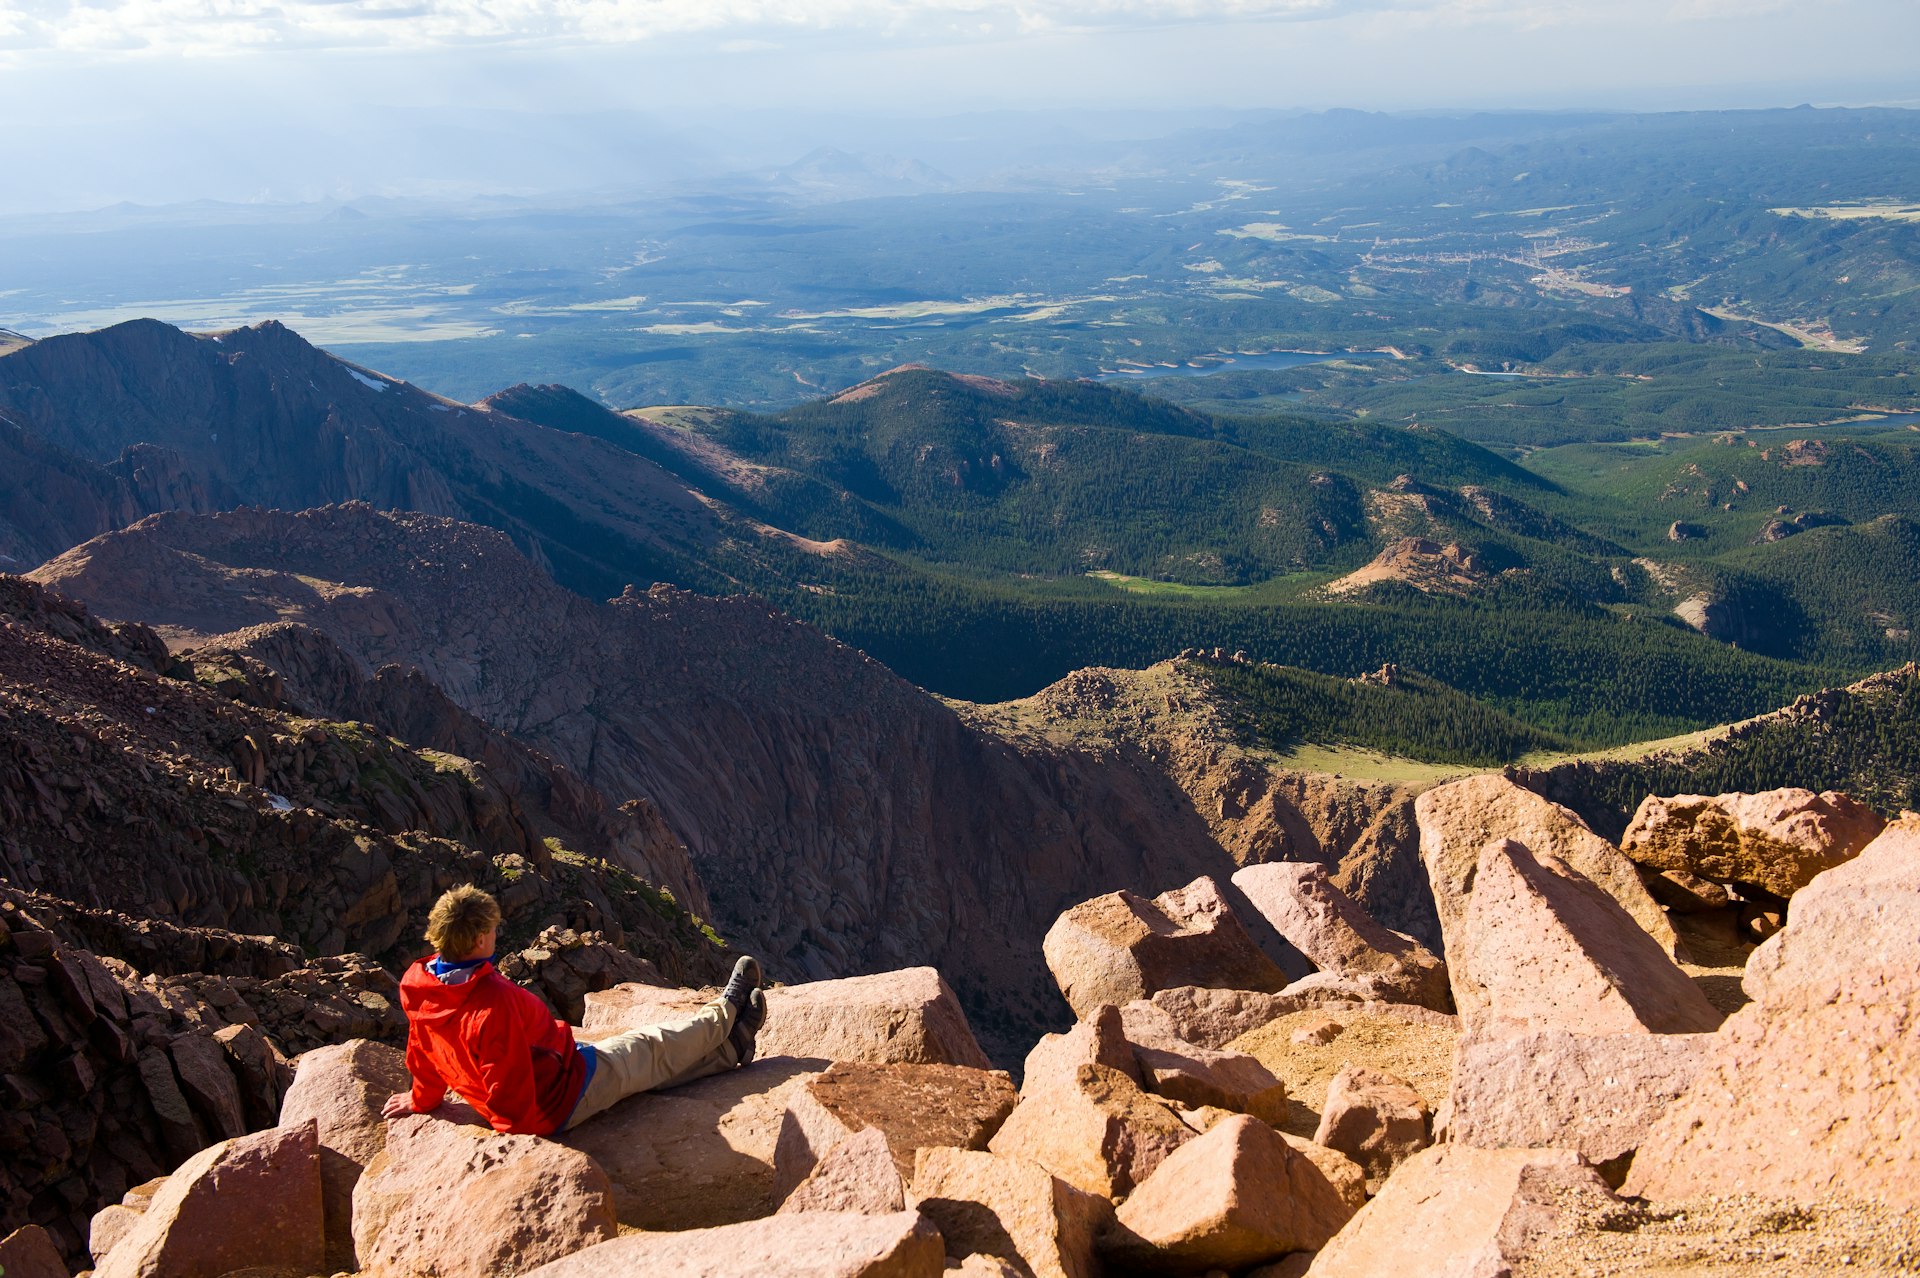 Vista Scenic View from Pikes Peak Summit in Colorado